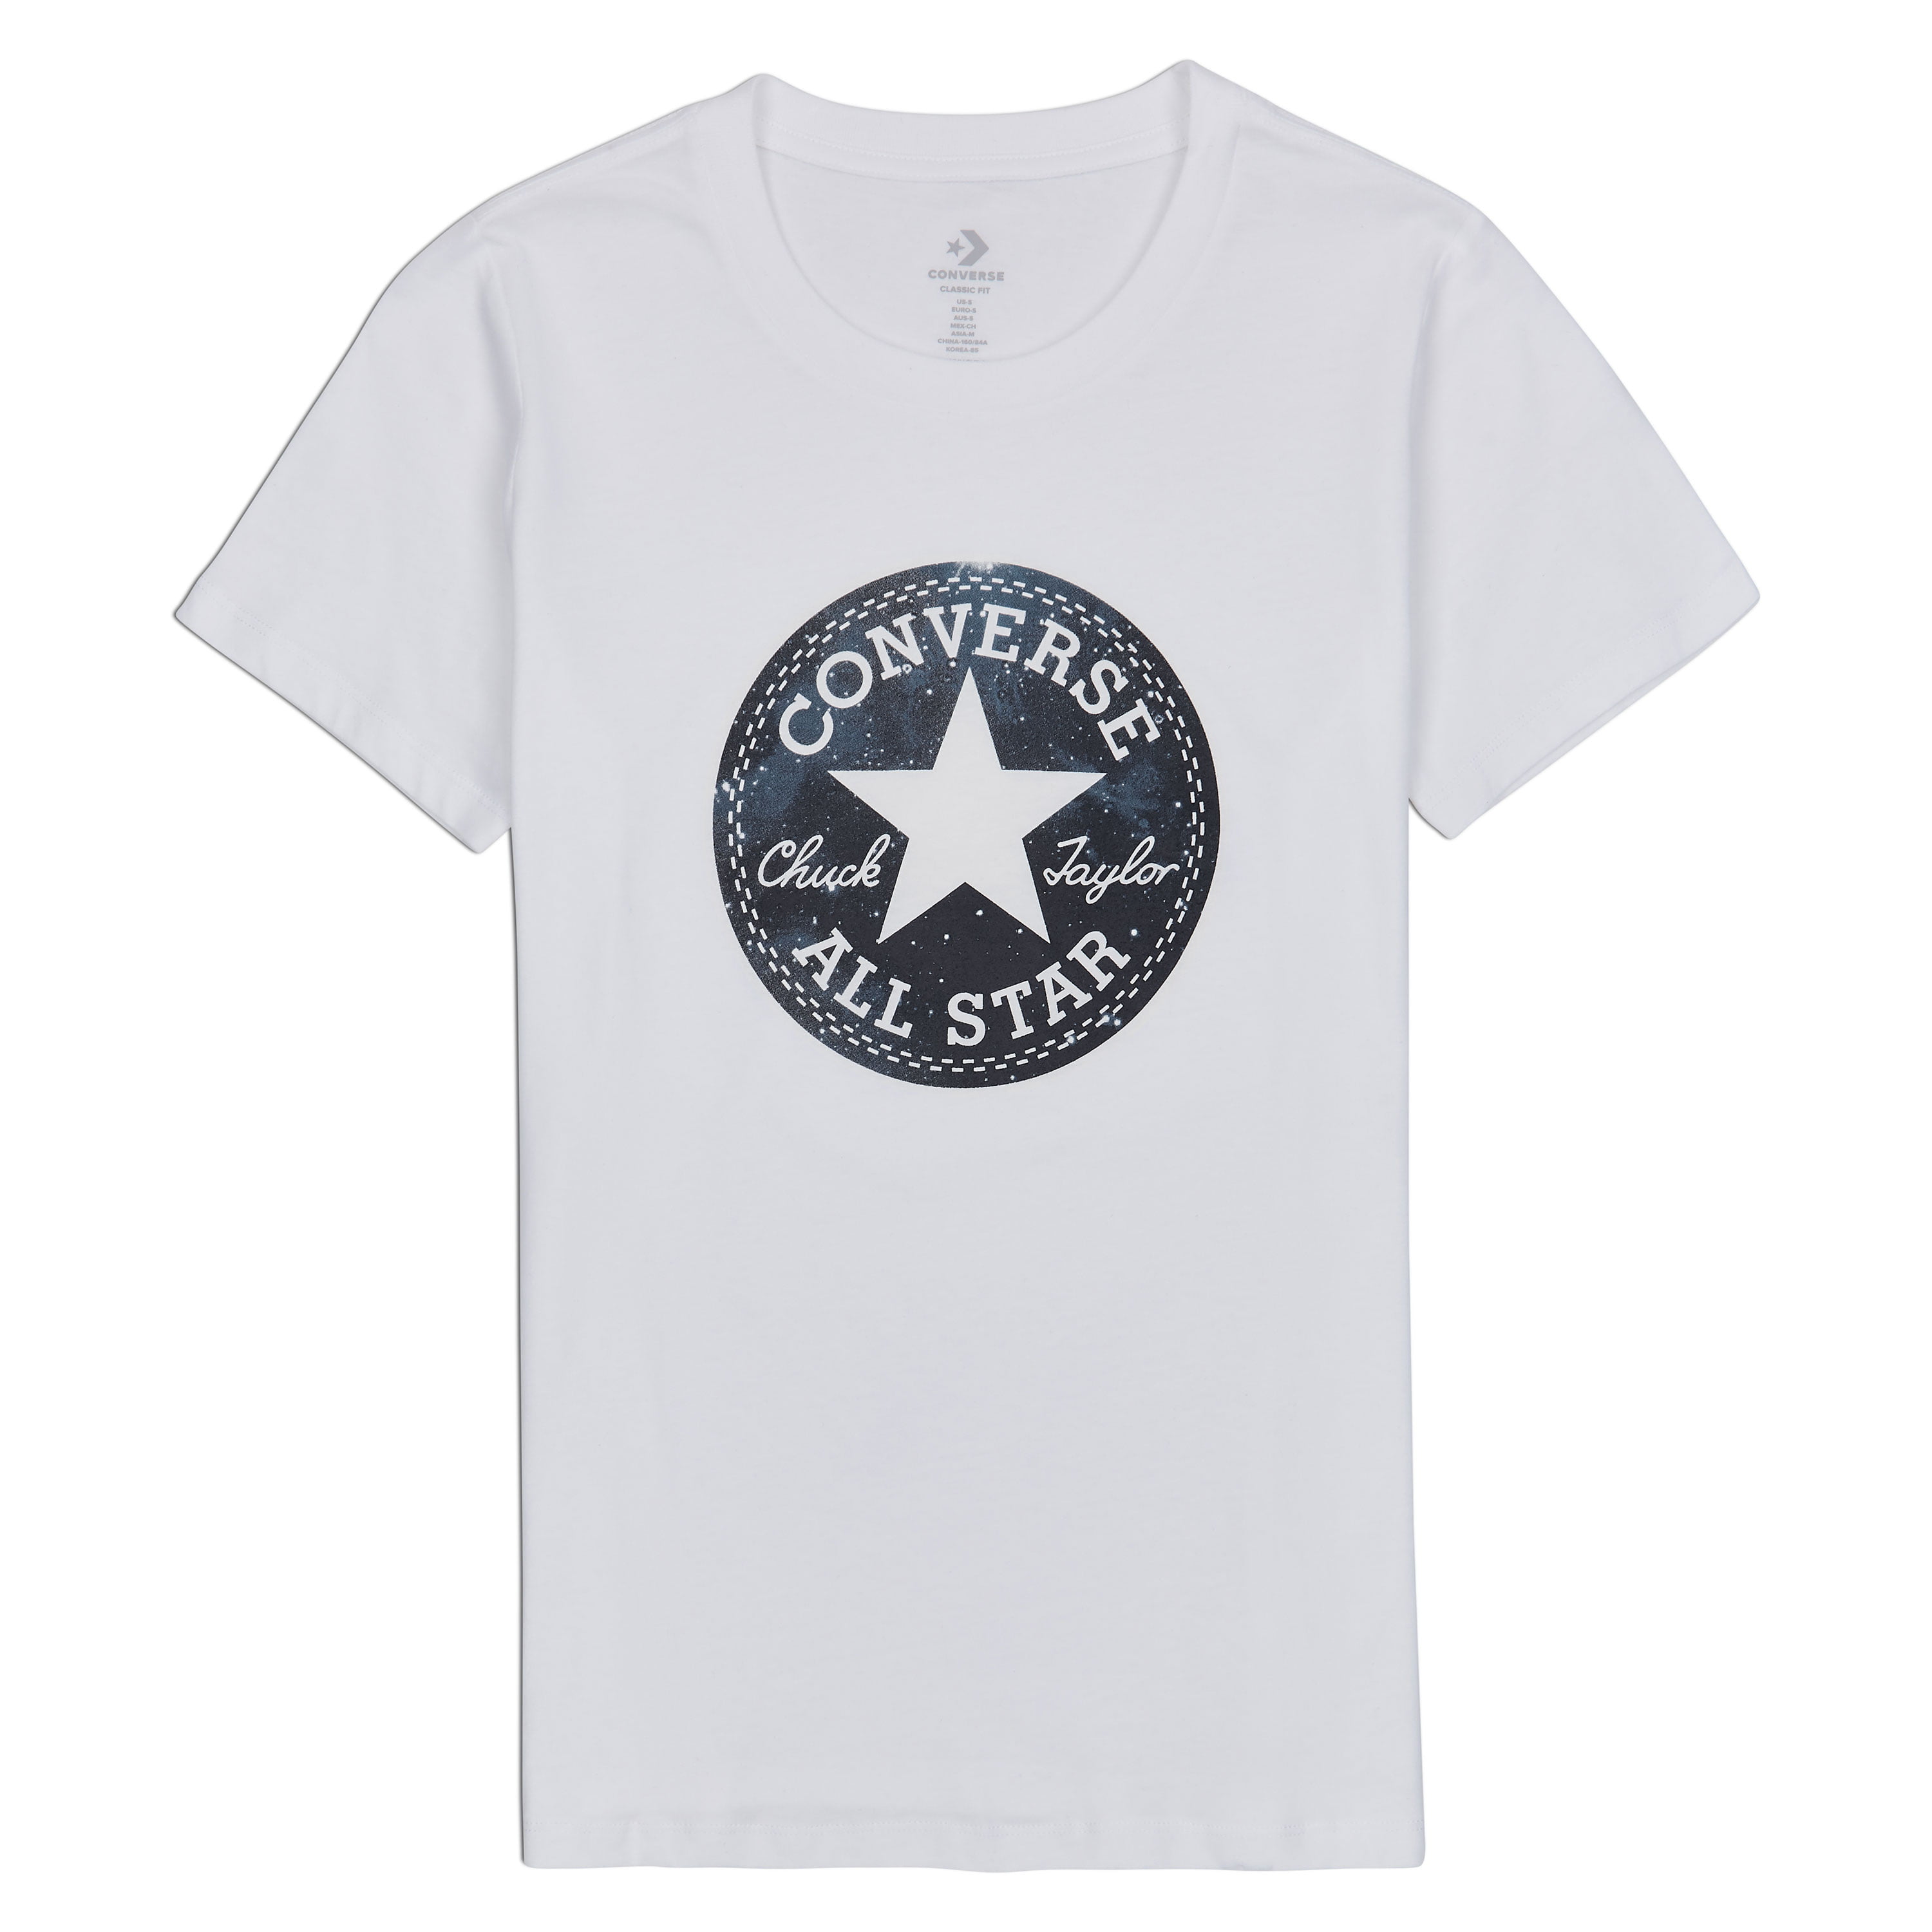 black and white converse shirt